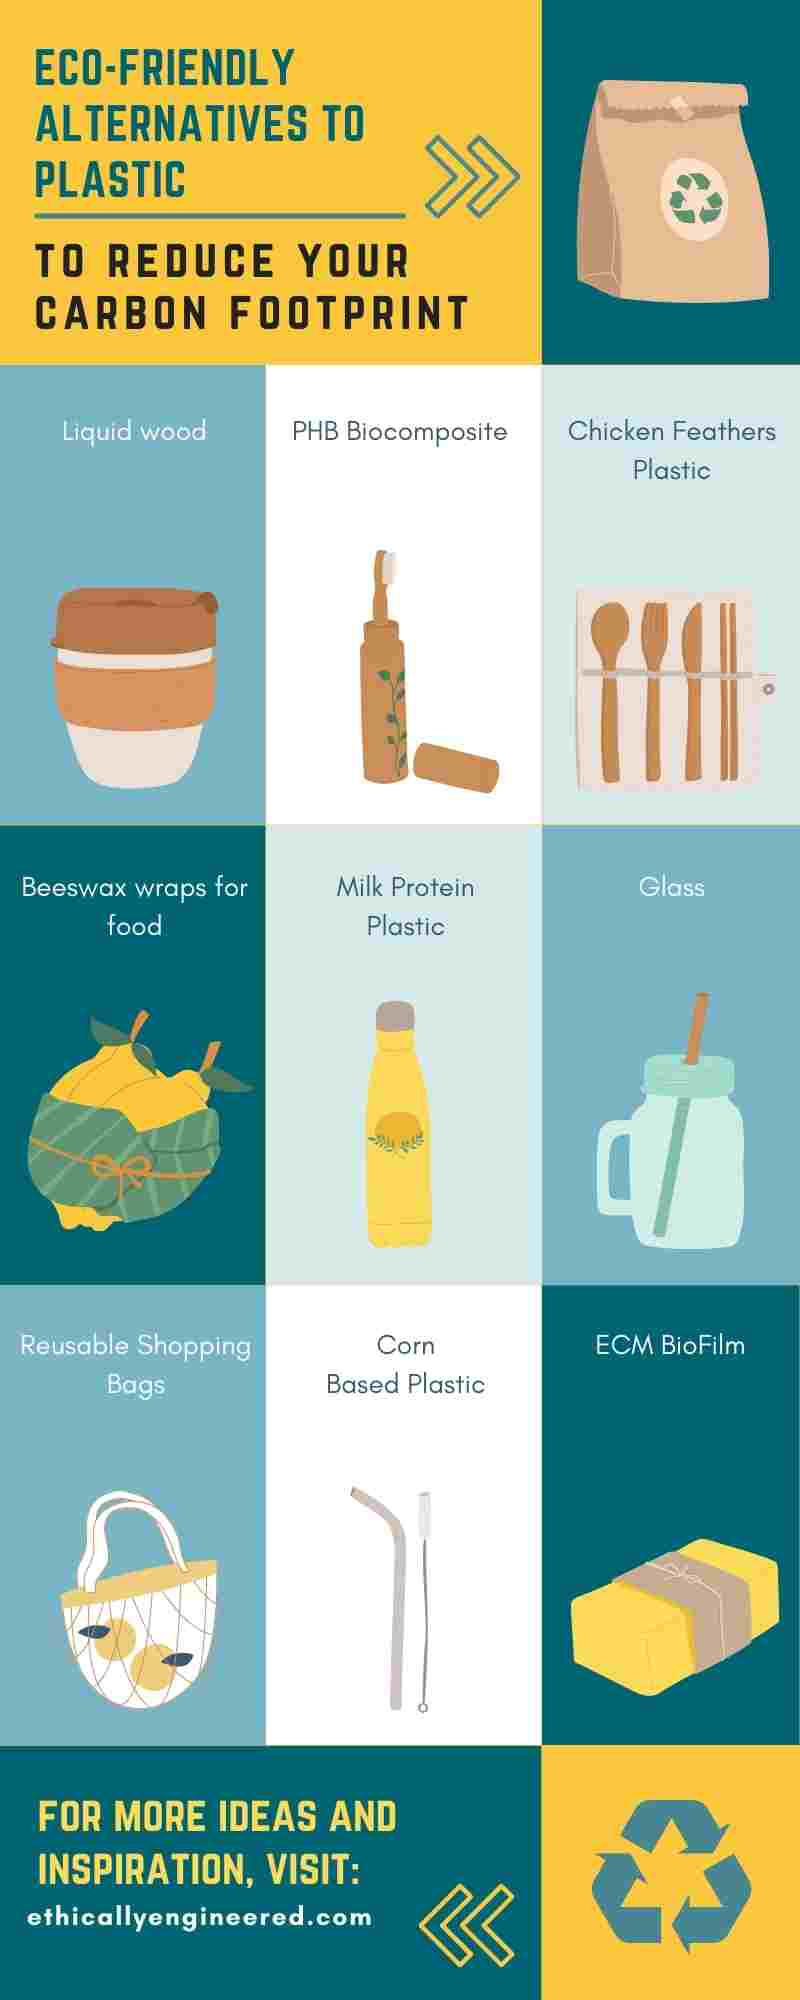 Eco-Friendly Alternatives to Plastic poster